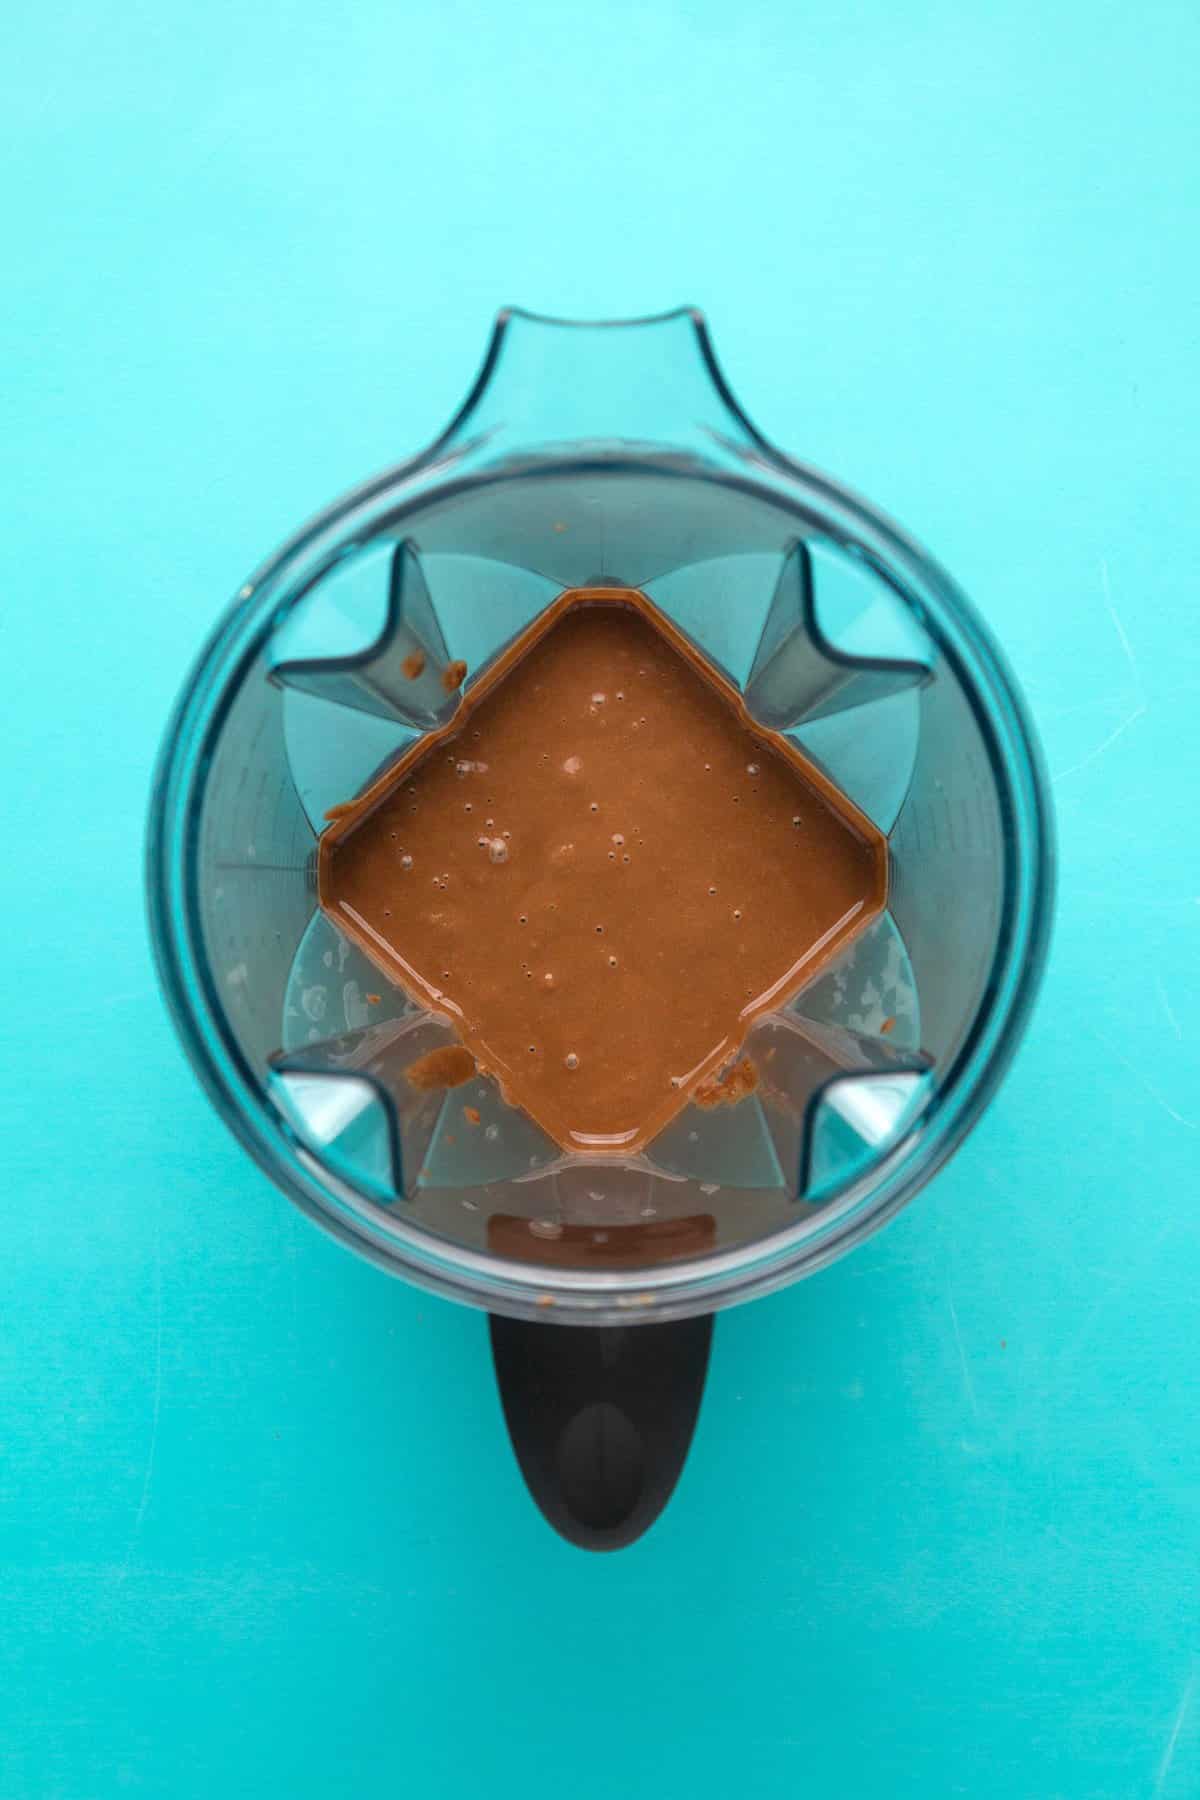 Vegan Nutella in a blender jug.